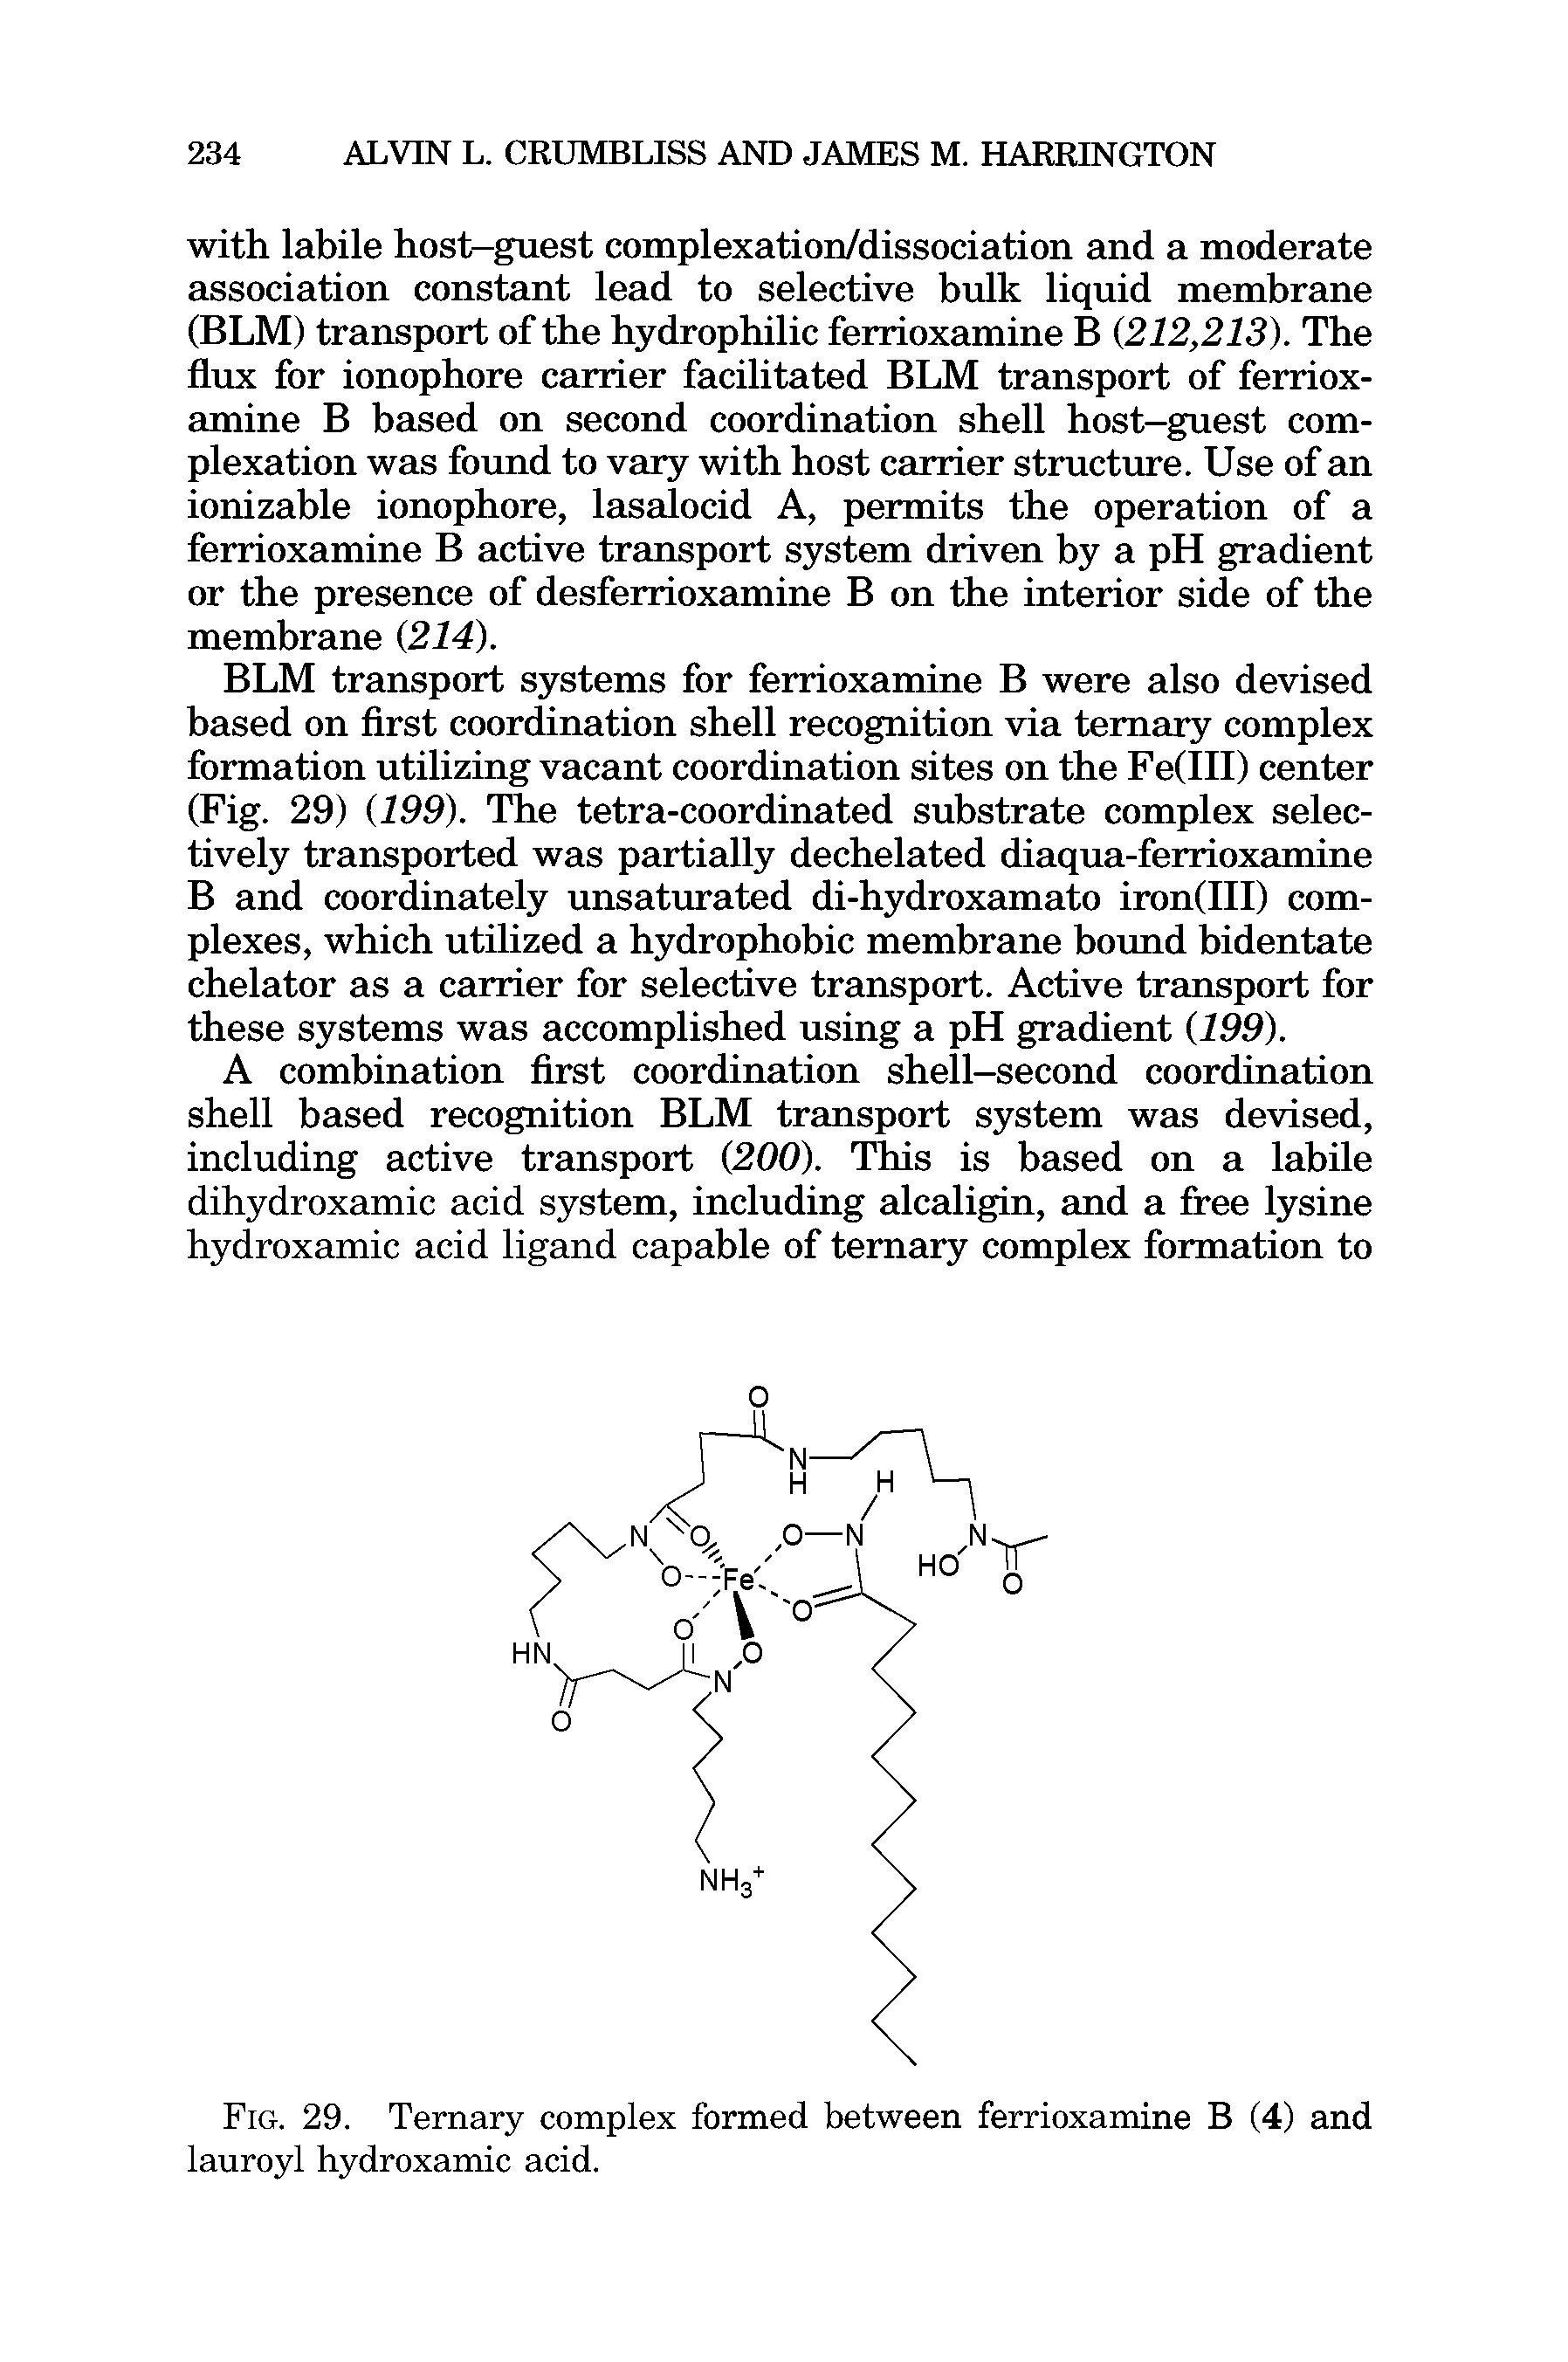 Fig. 29. Ternary complex formed between ferrioxamine B (4) and lauroyl hydroxamic acid.